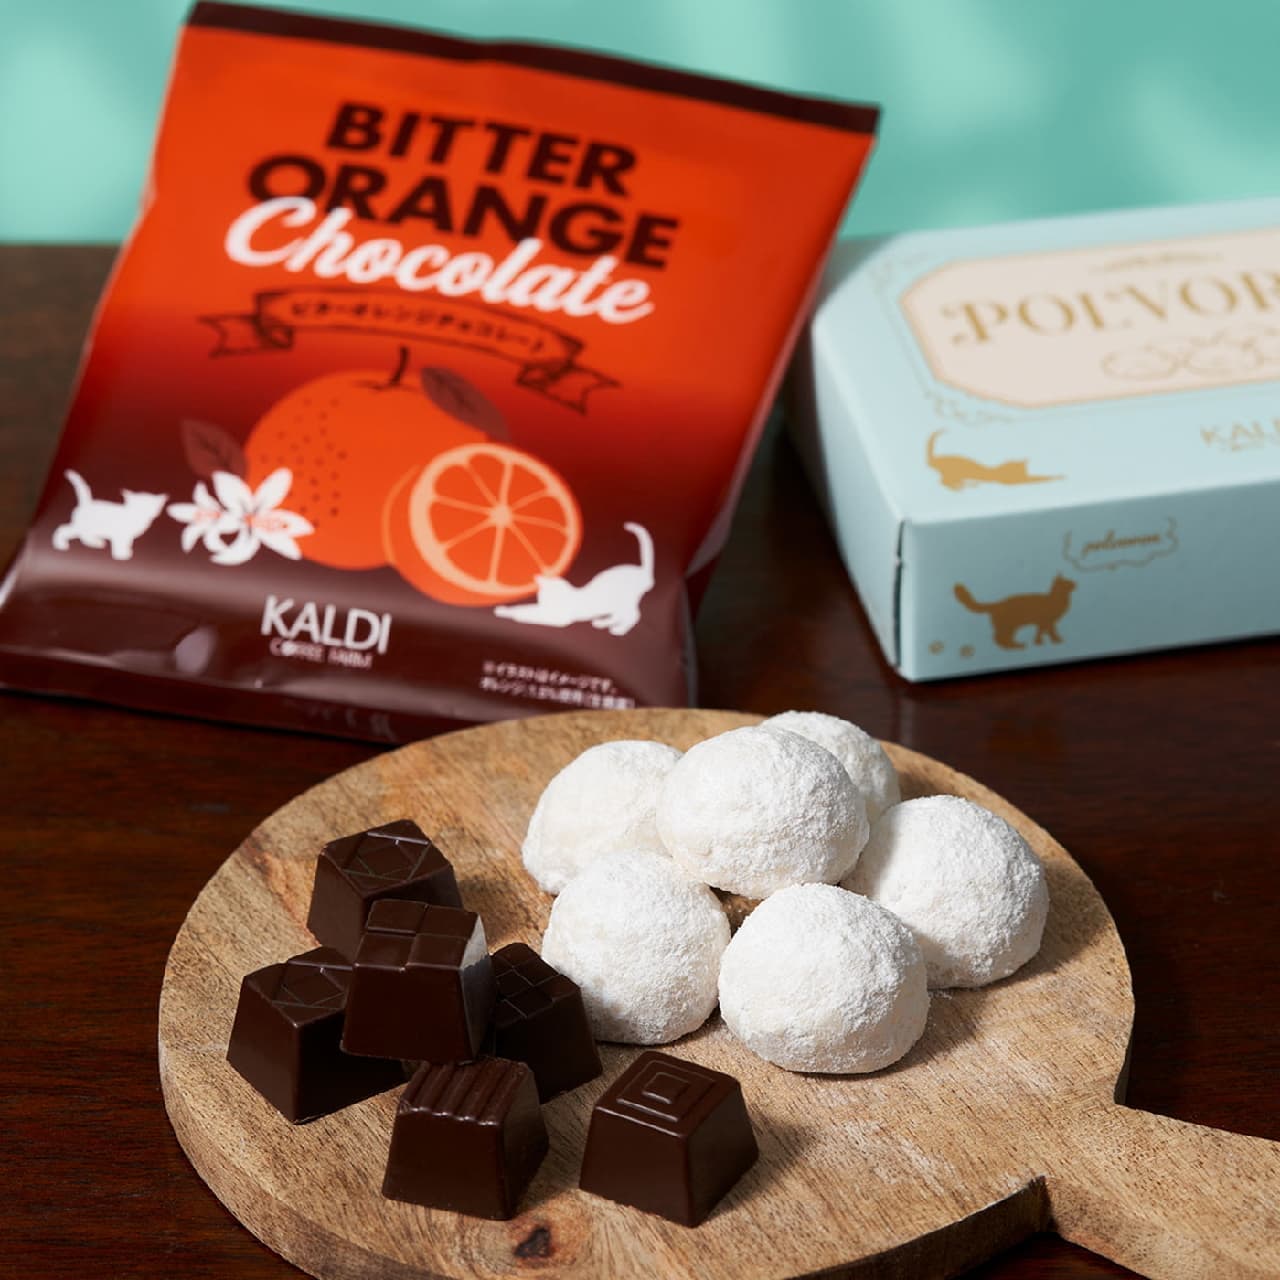 KALDI "Bitter Orange Chocolate" and "Polvoron